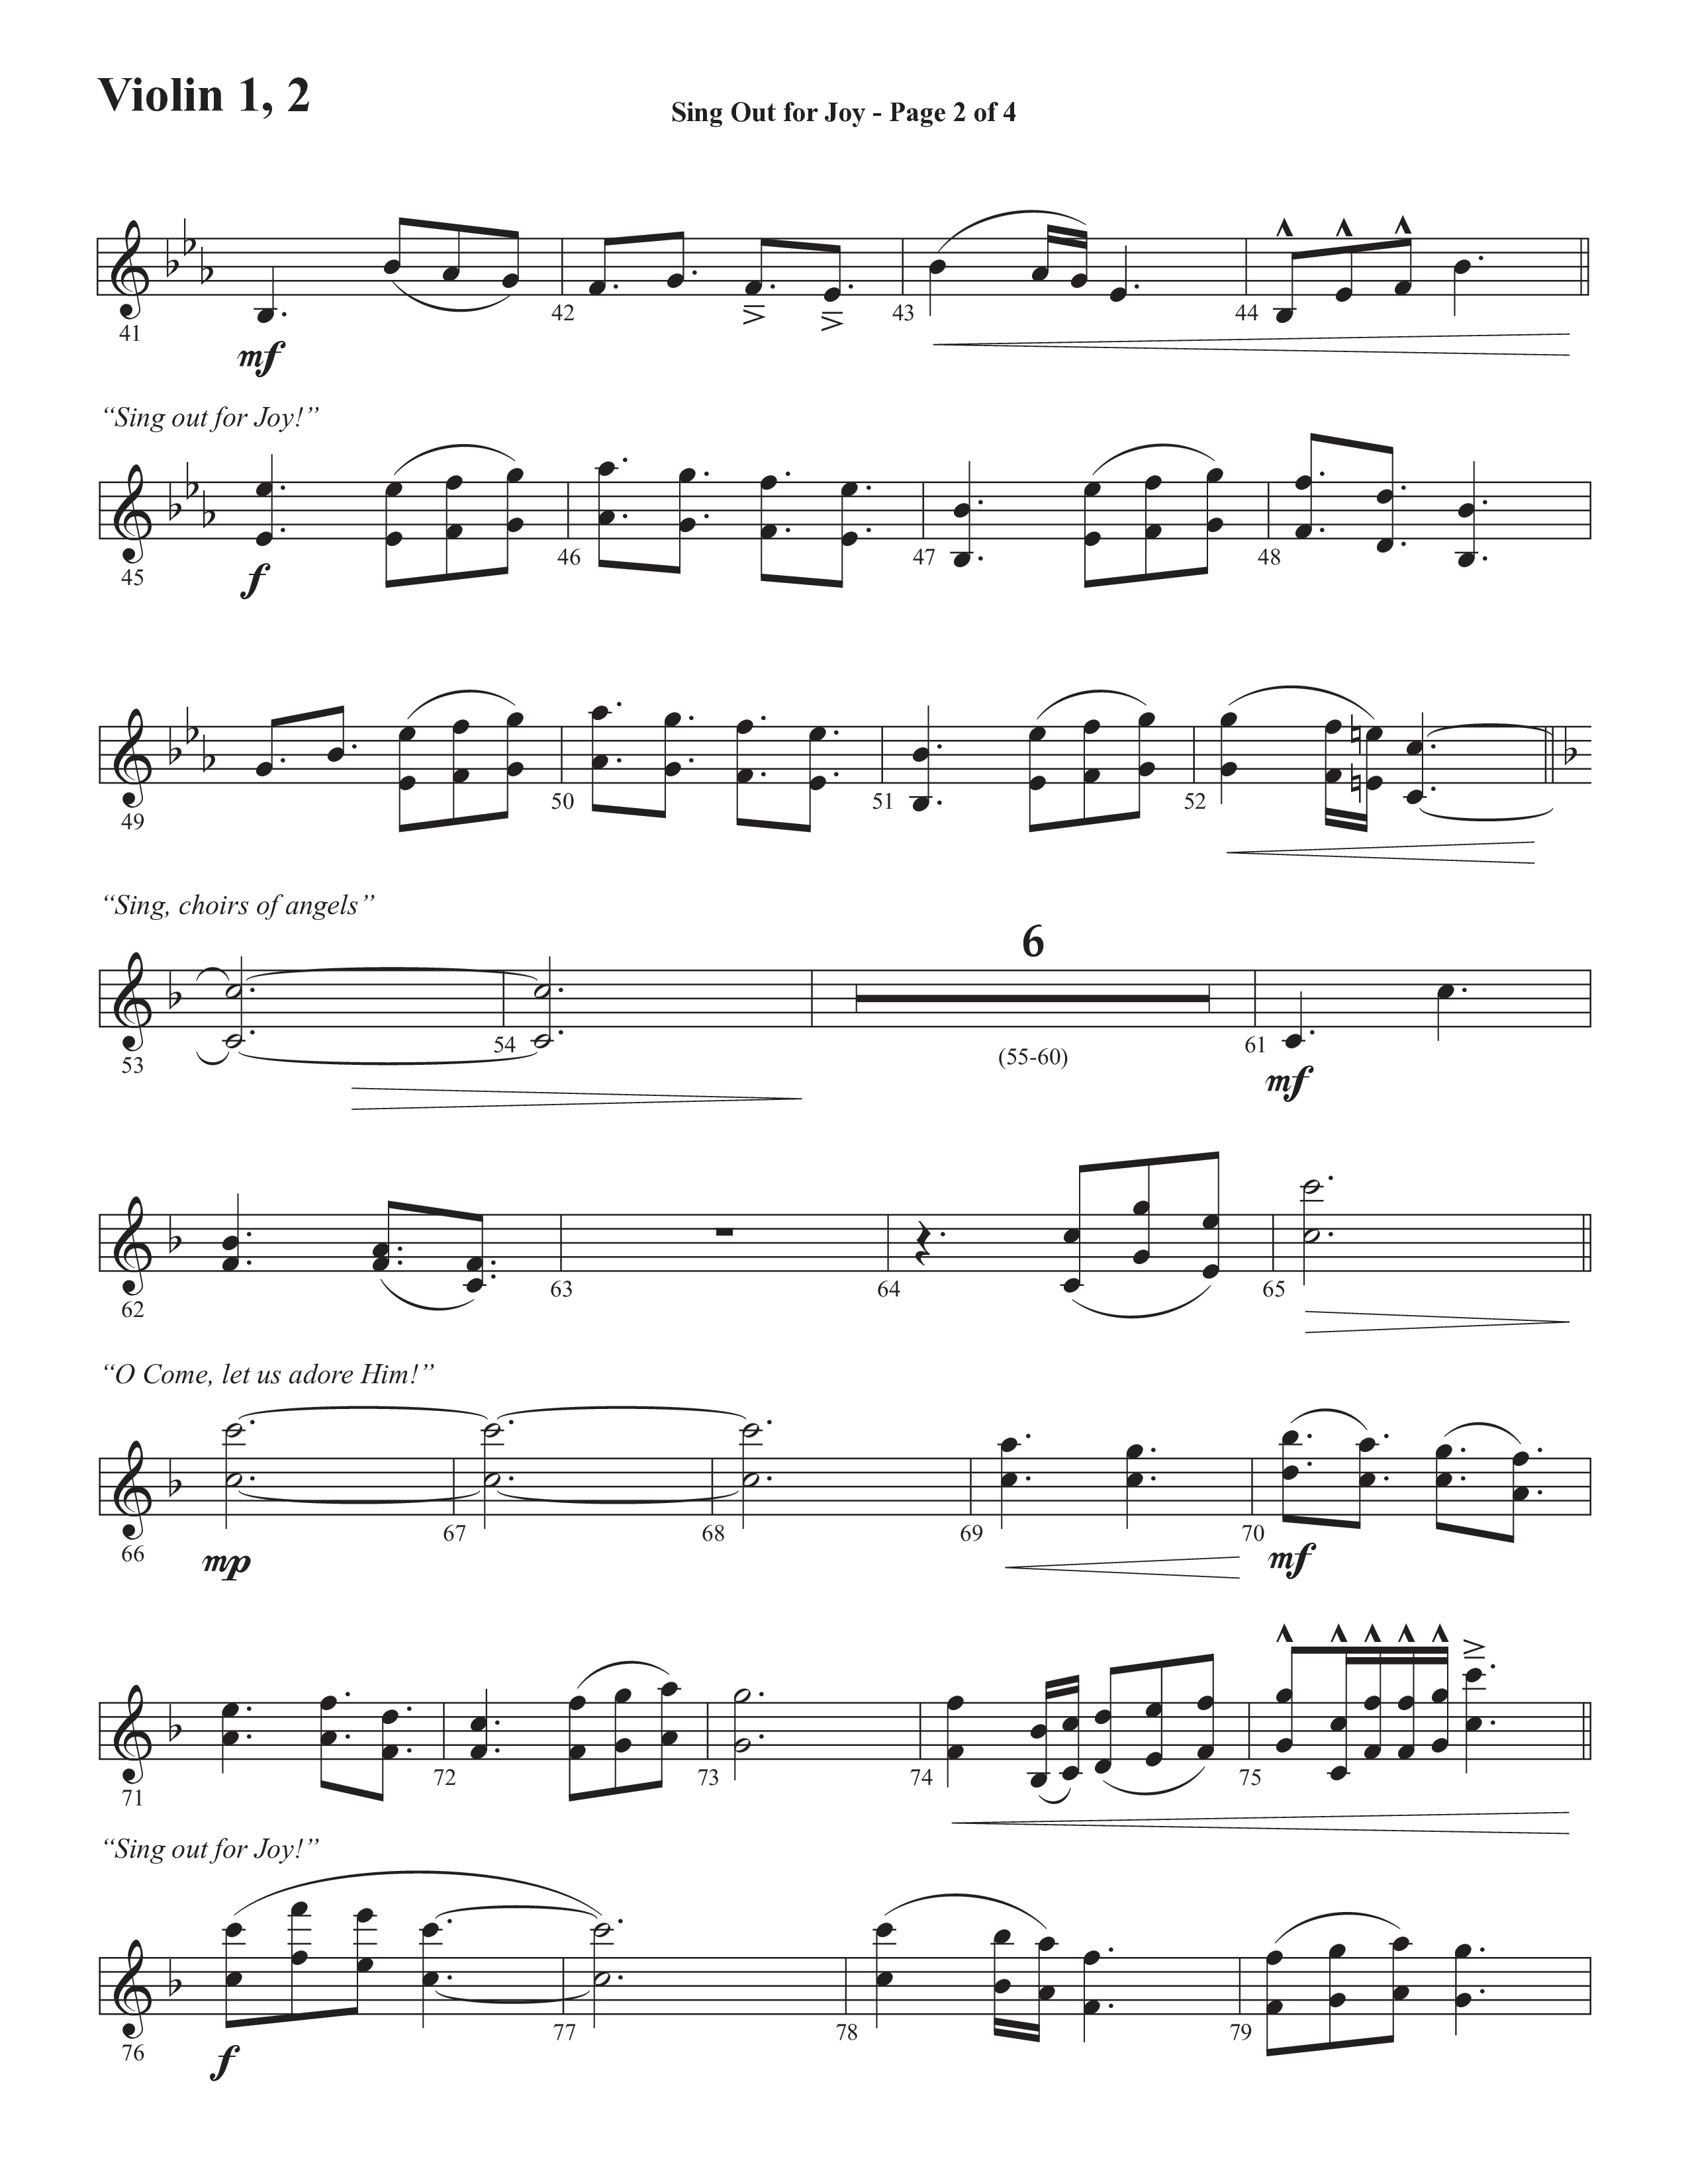 Sing Out For Joy (Choral Anthem SATB) Violin 1/2 (Semsen Music / Arr. John Bolin / Orch. Cliff Duren)